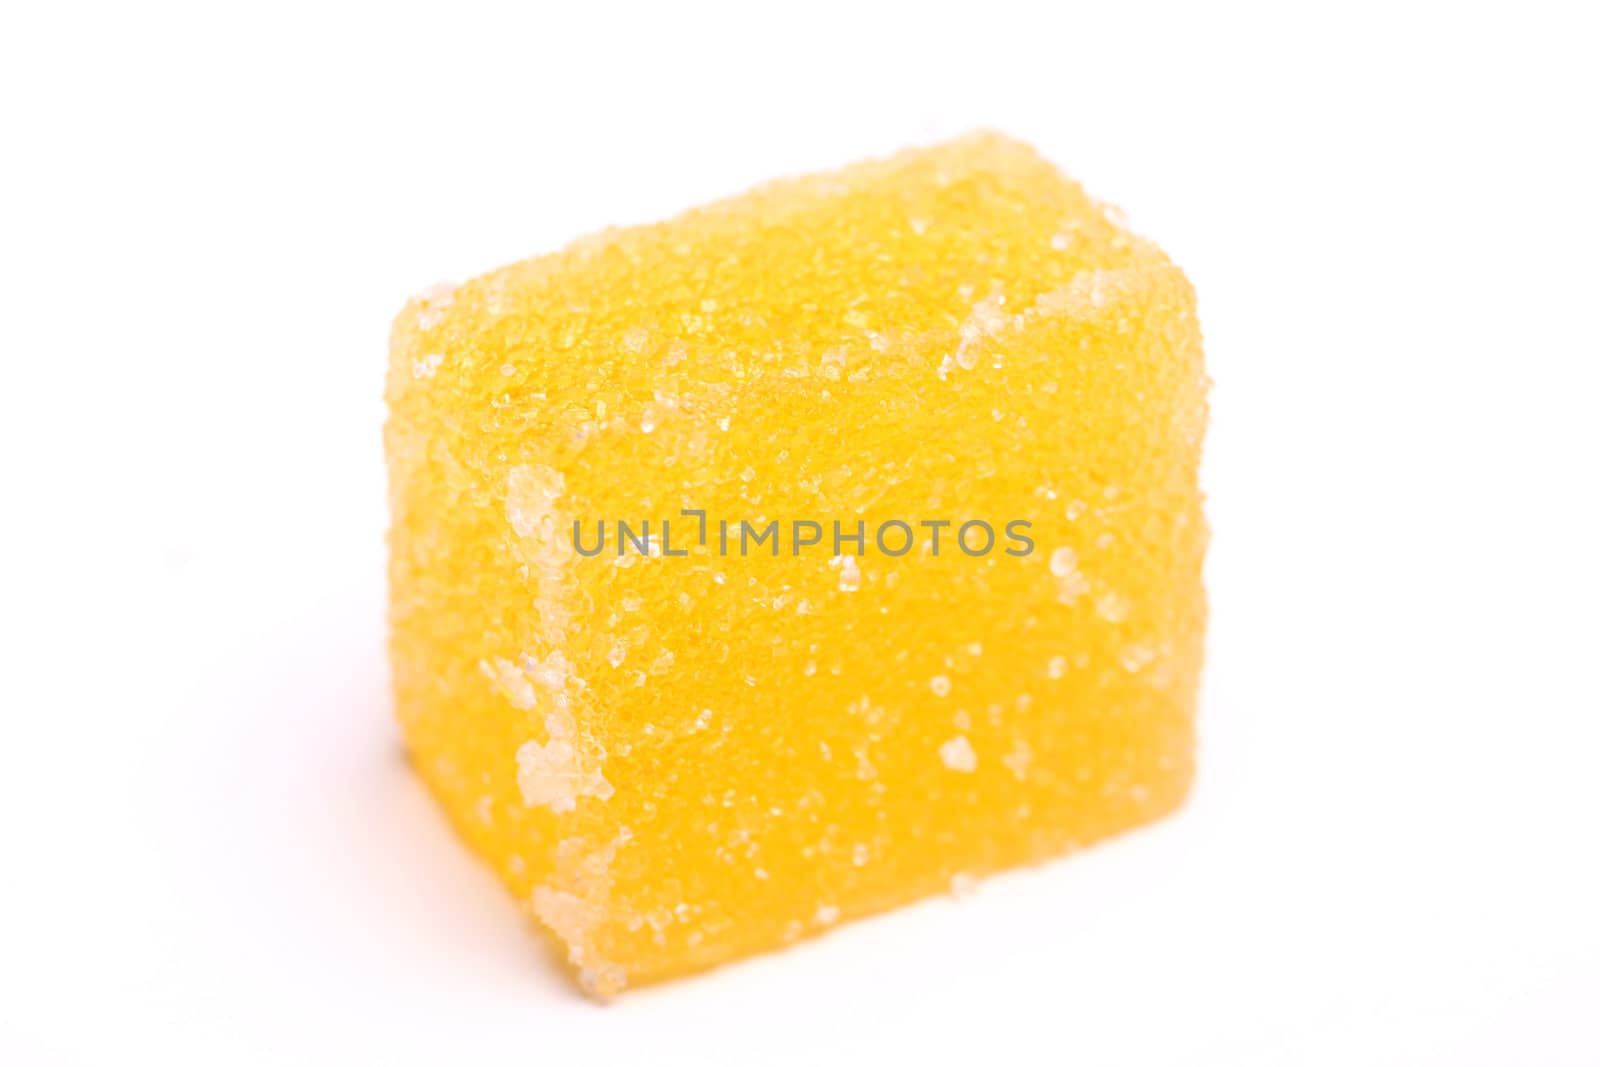 Delicious yellow marmalade on a white by rufatjumali